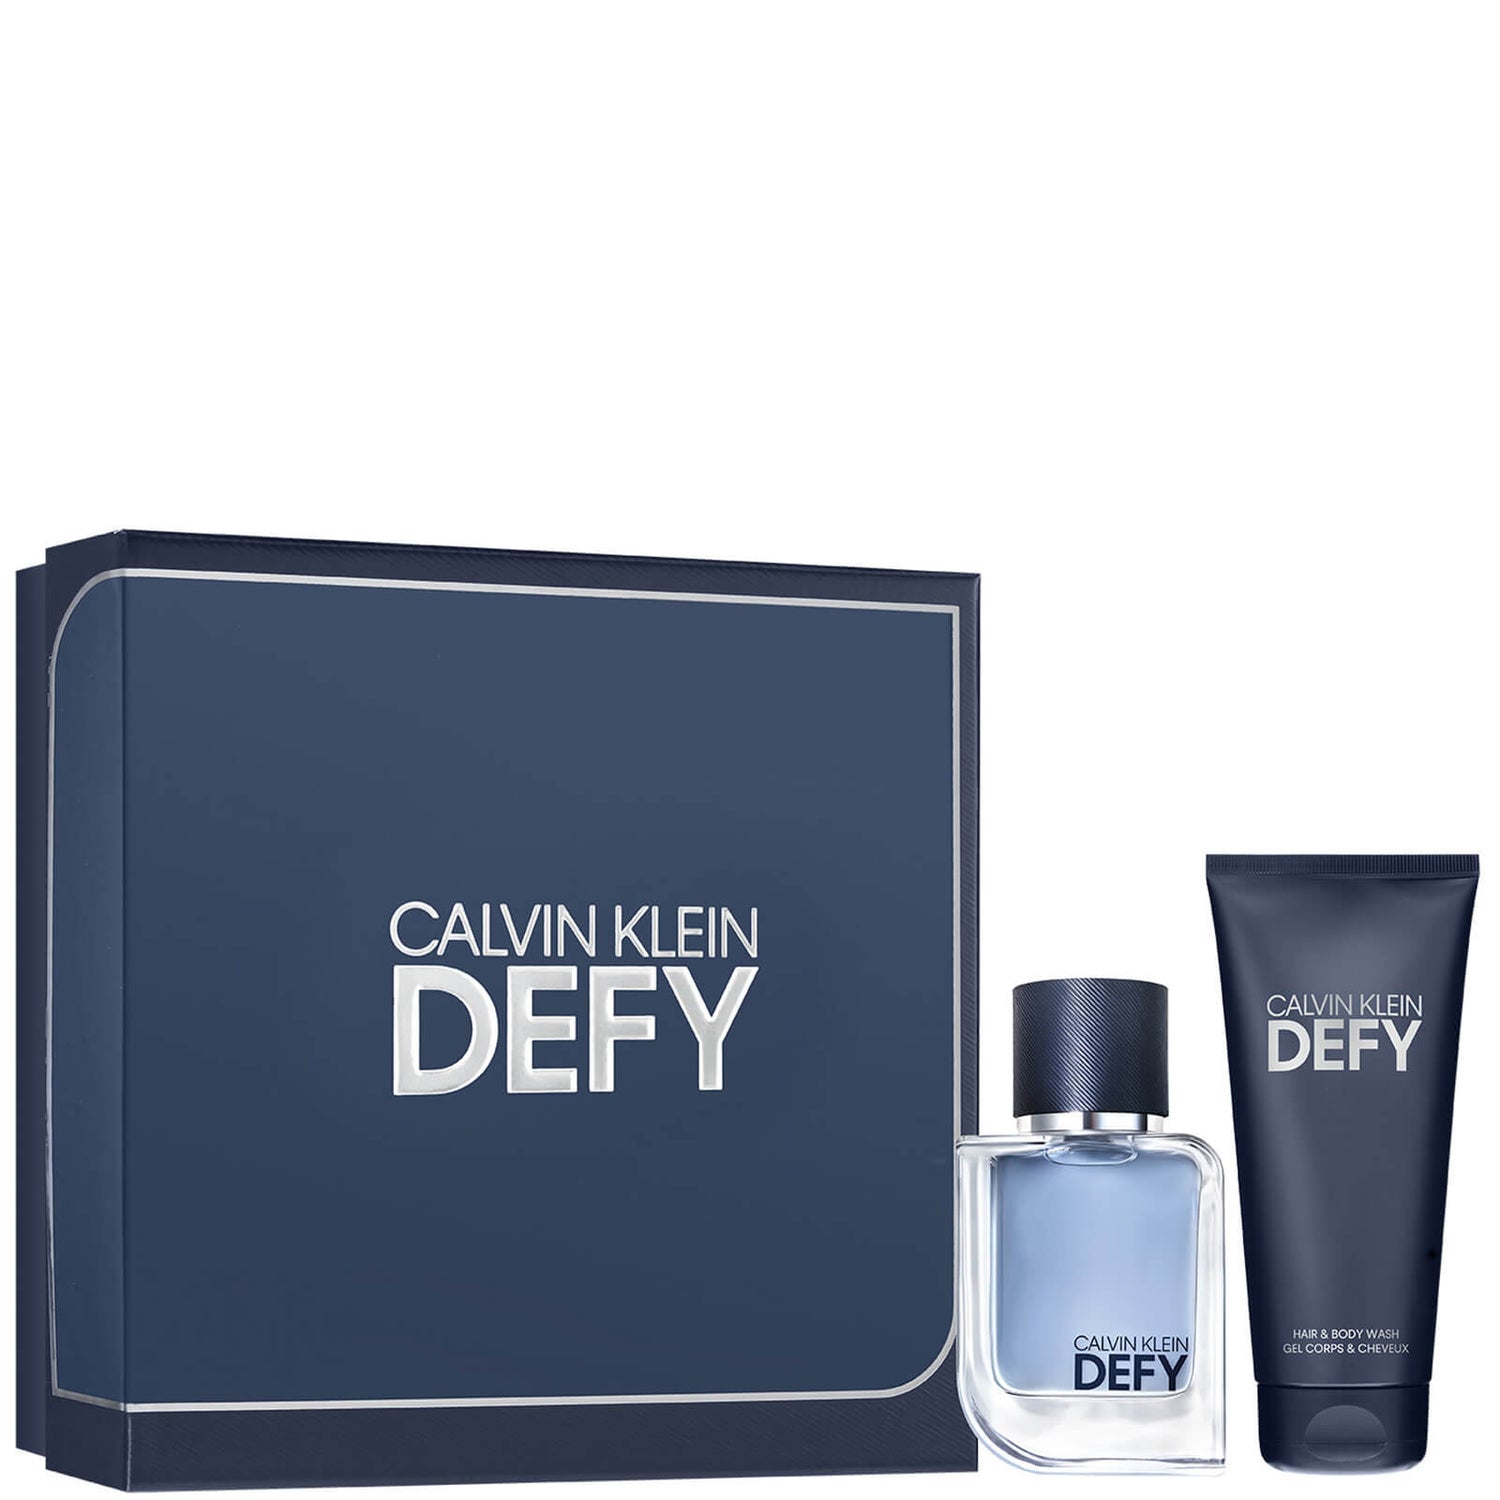 Calvin Klein Defy Eau de Toilette 50ml Gift Set | Lookfantastic UAE